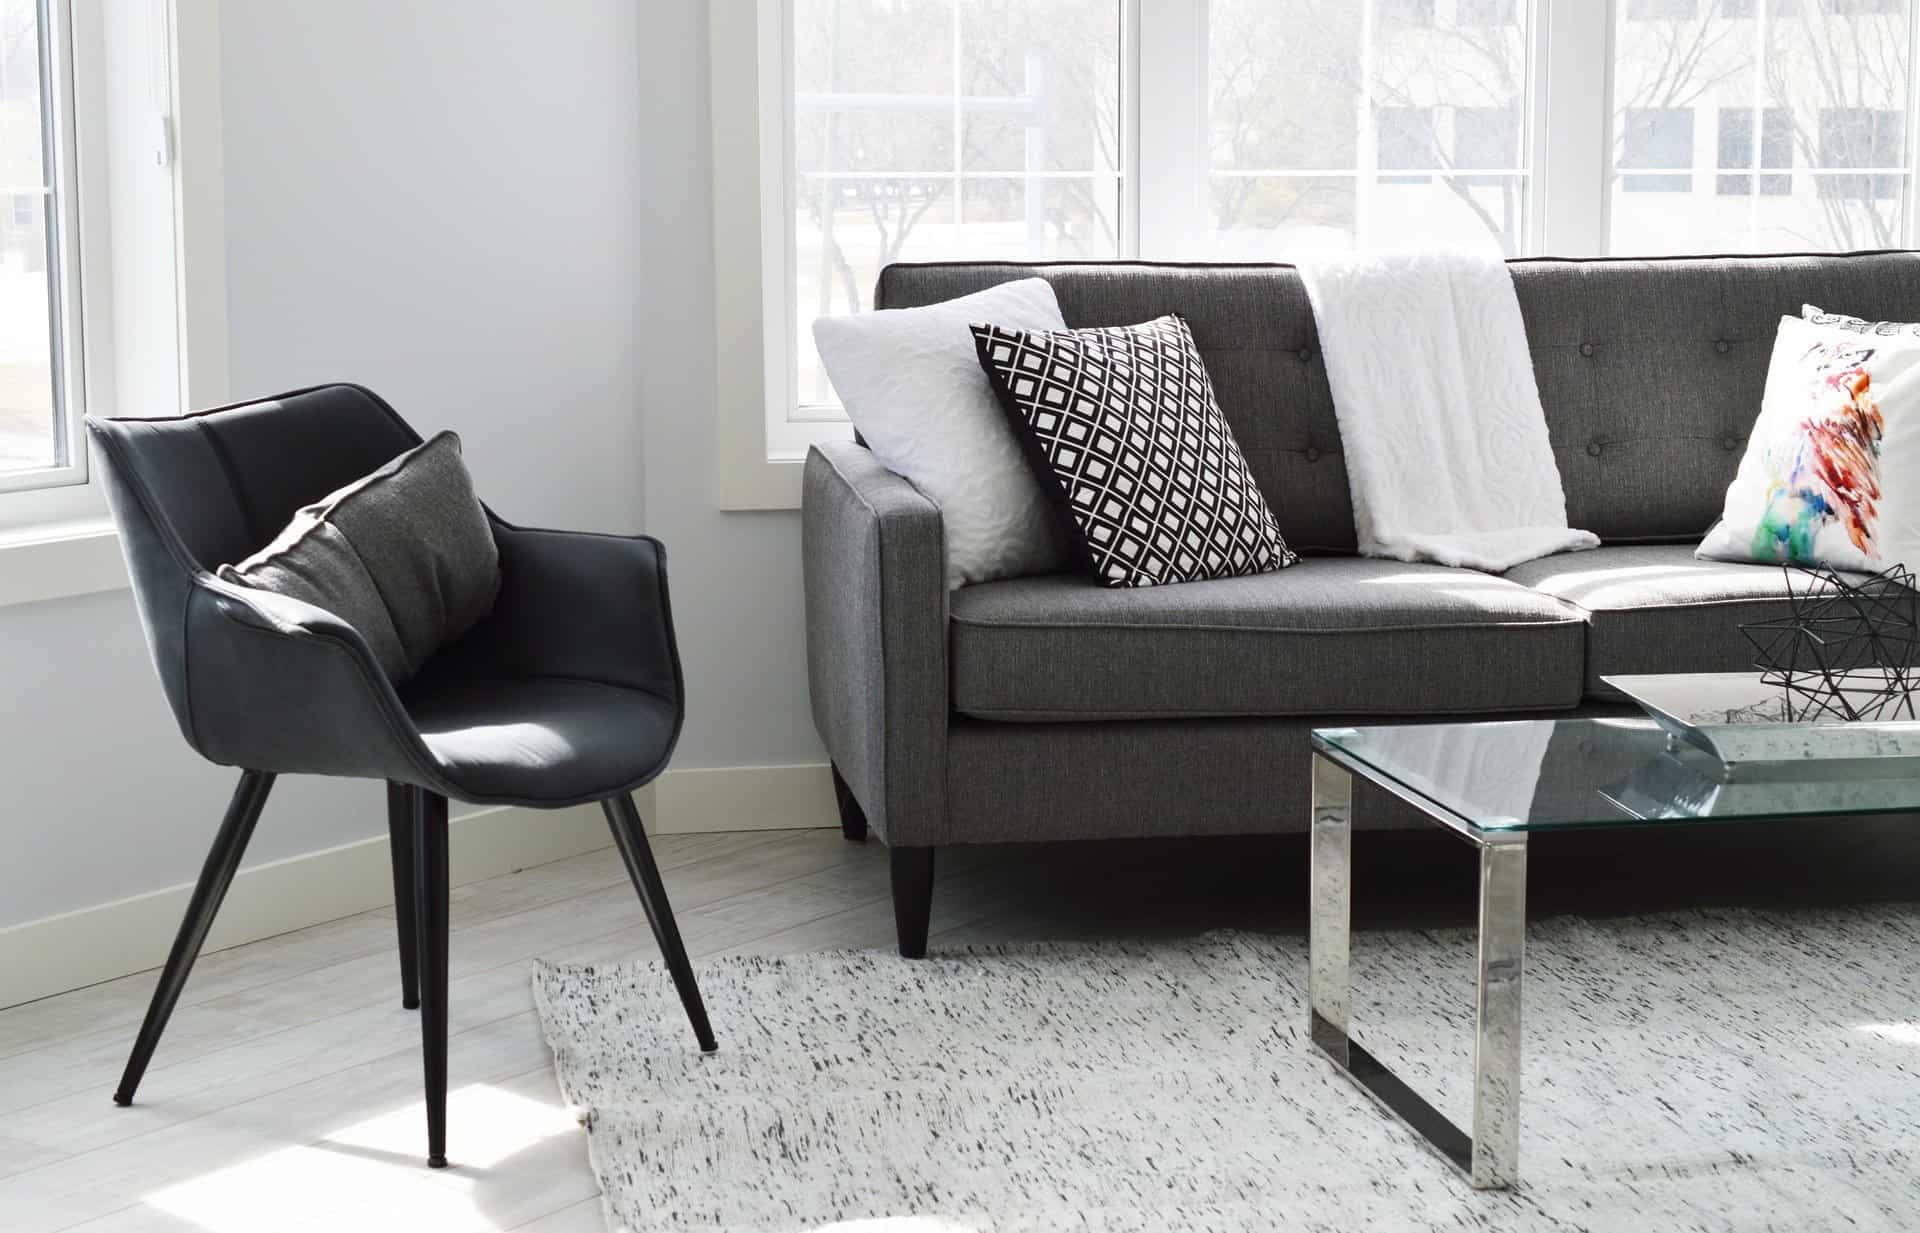 Upholstery living room furniture